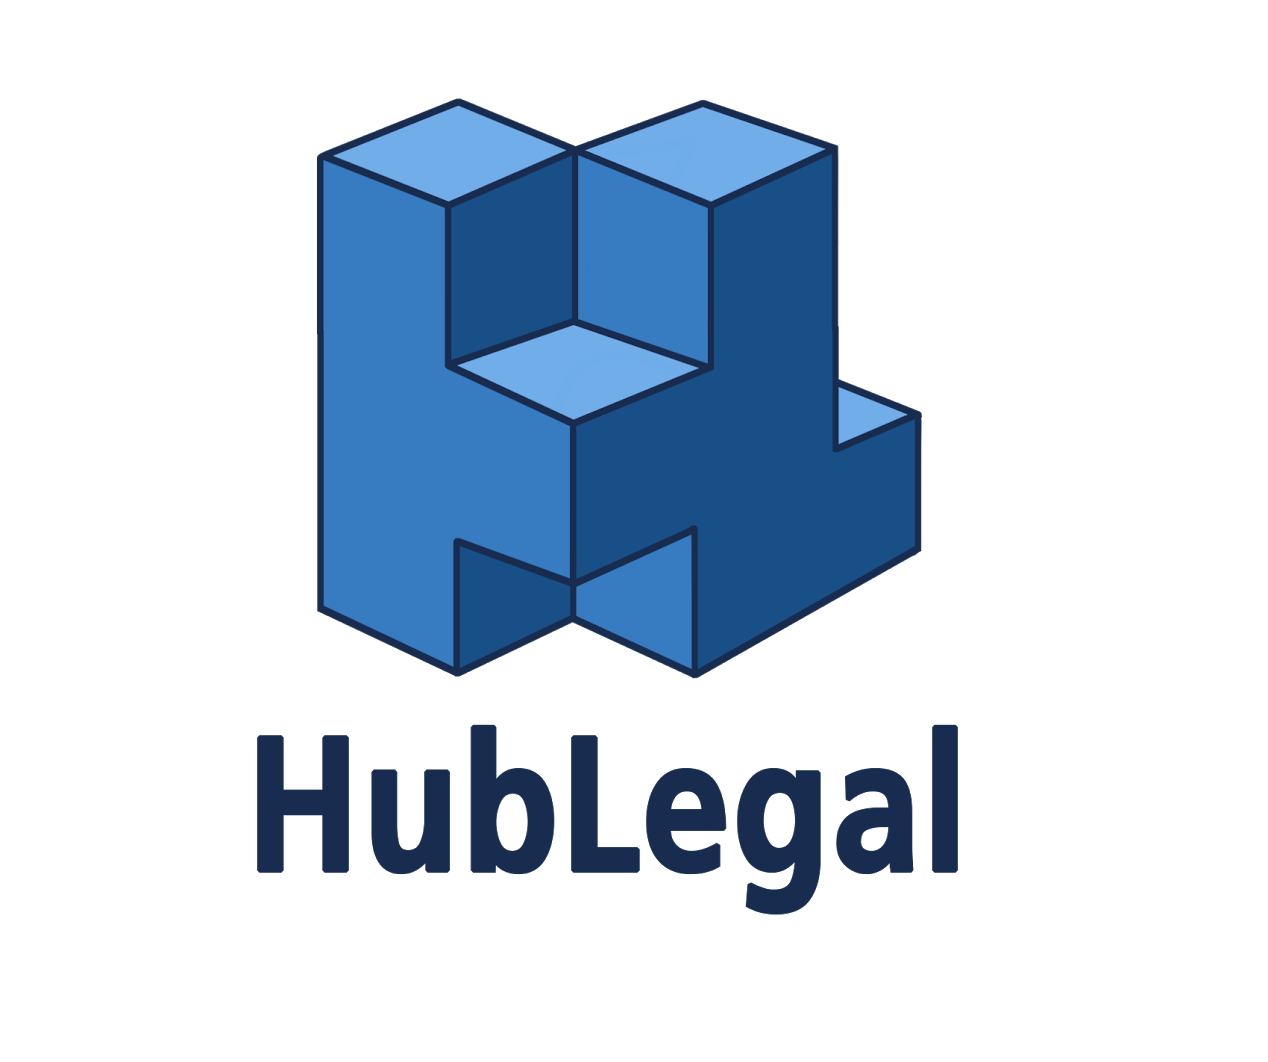 Hub Legal